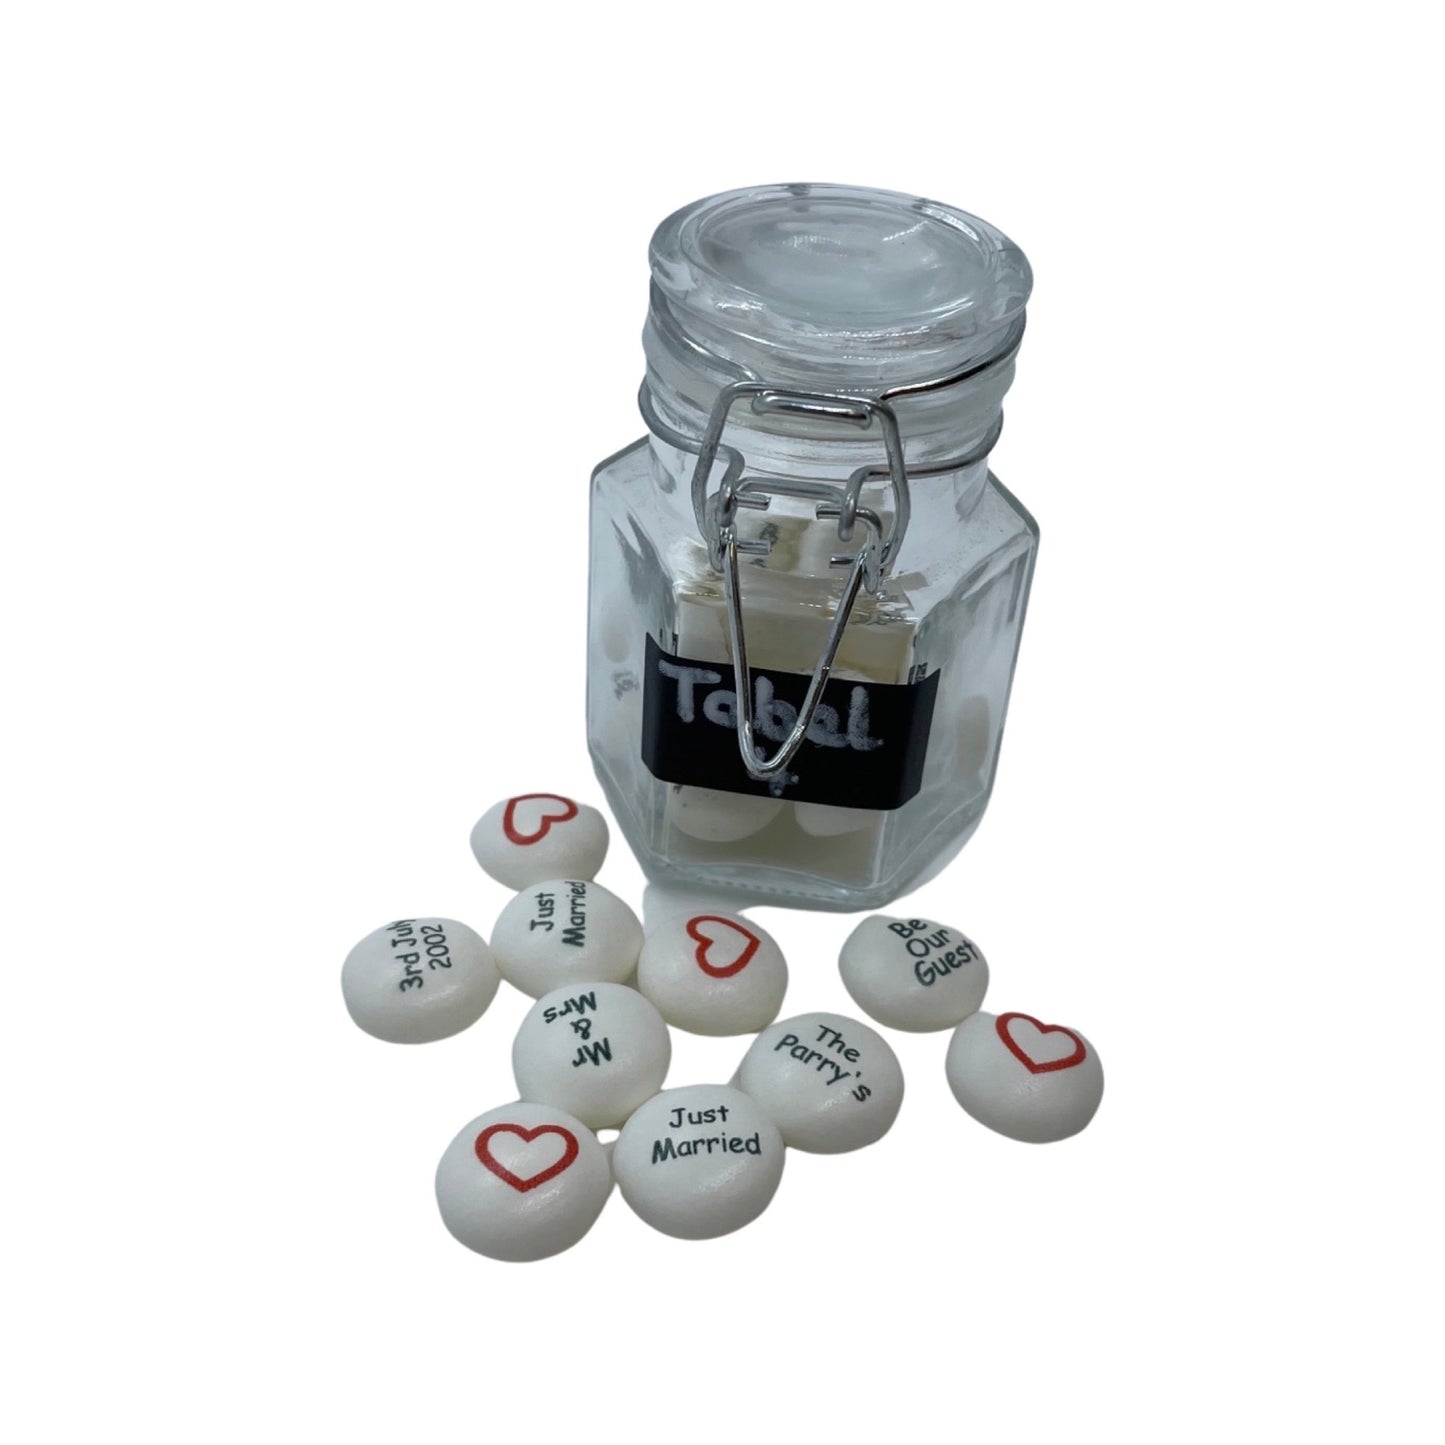 Personalised wedding favour jars UK